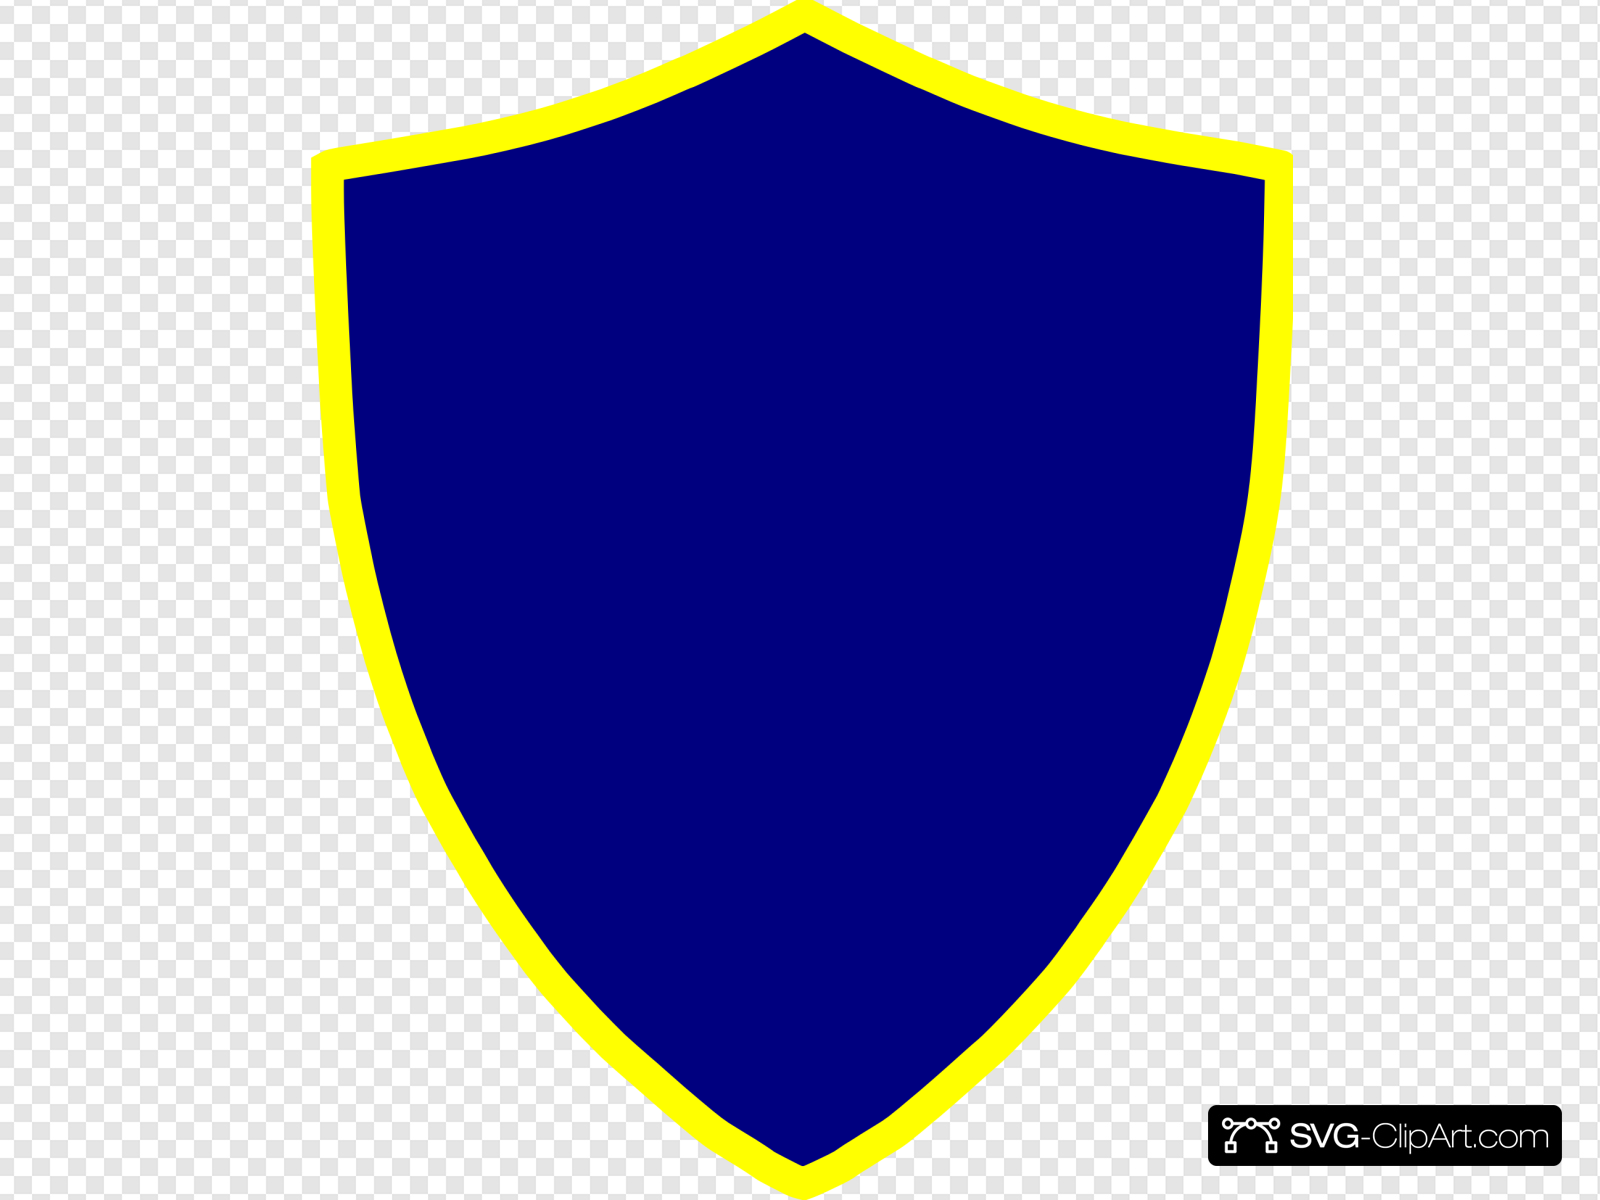 shield clipart blue